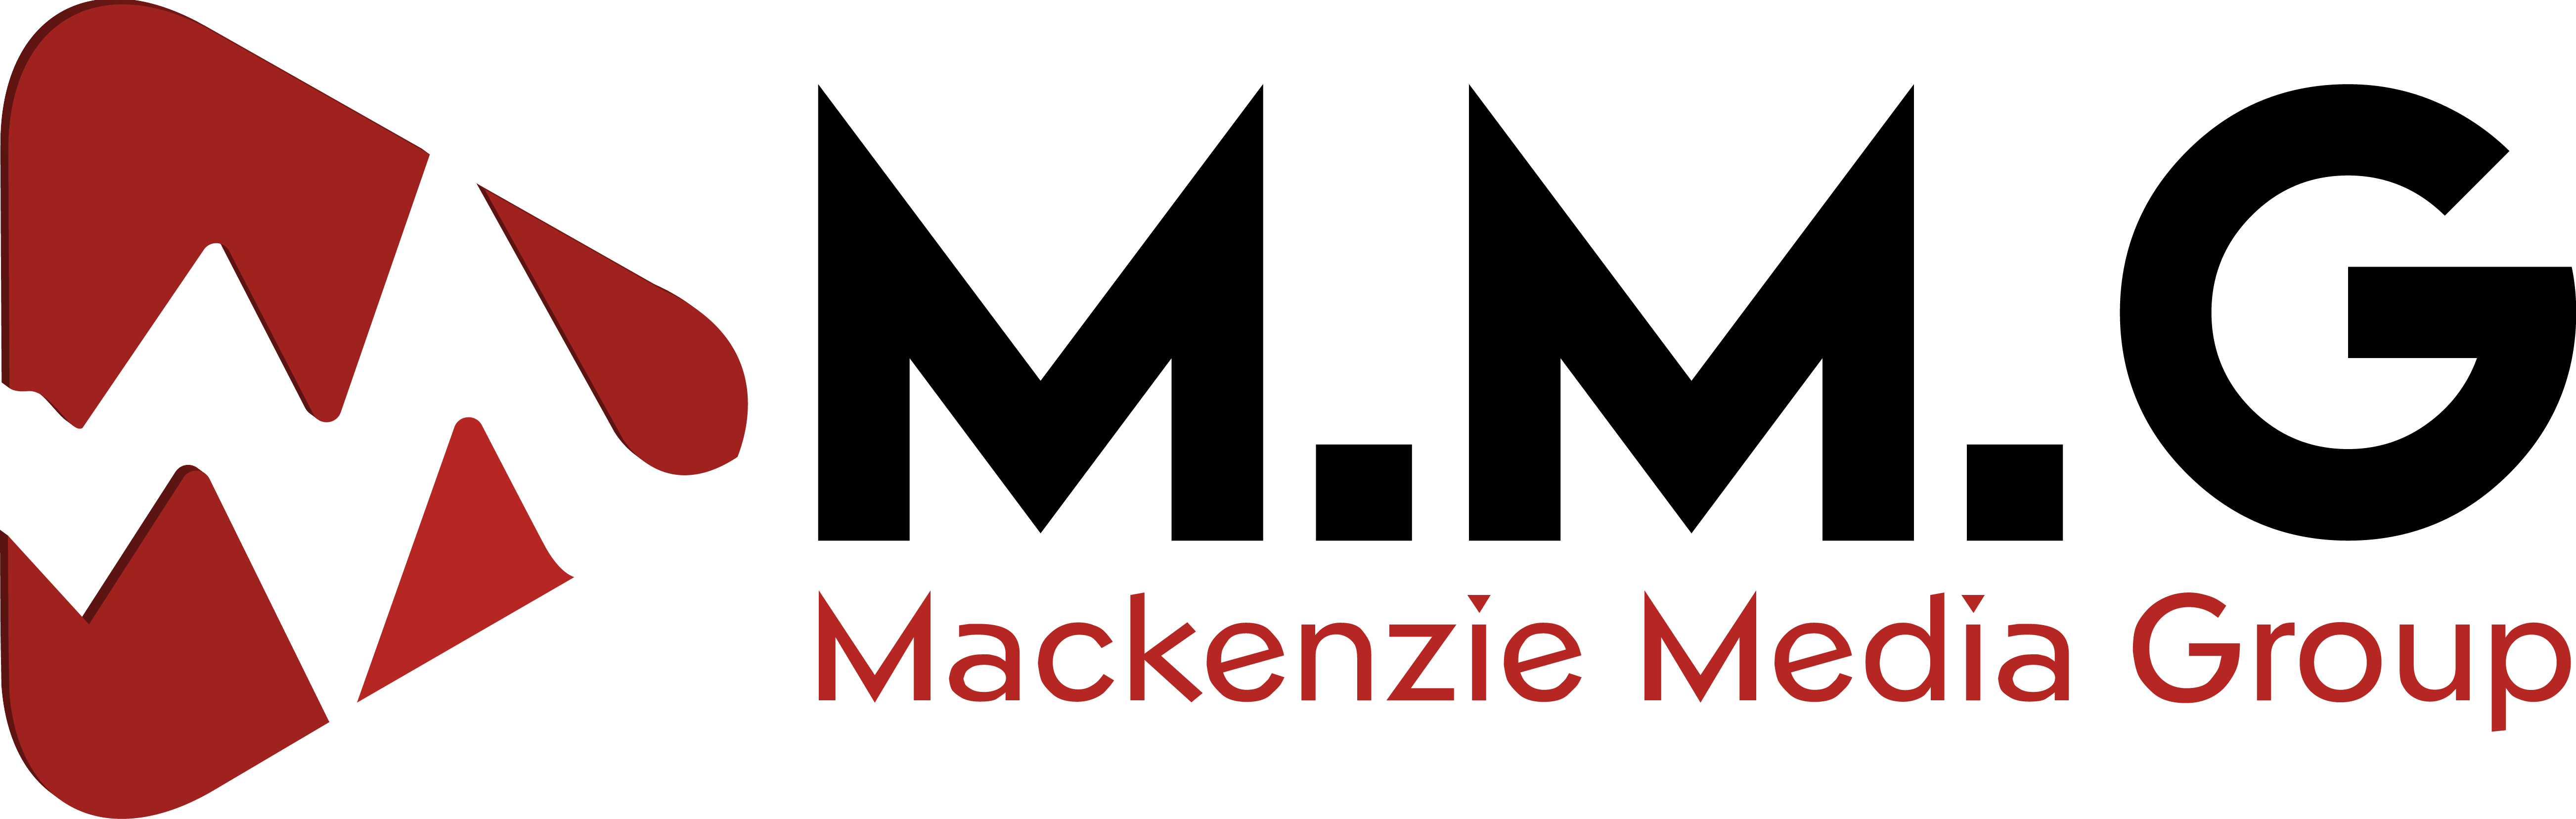 Mackenzie Media Group